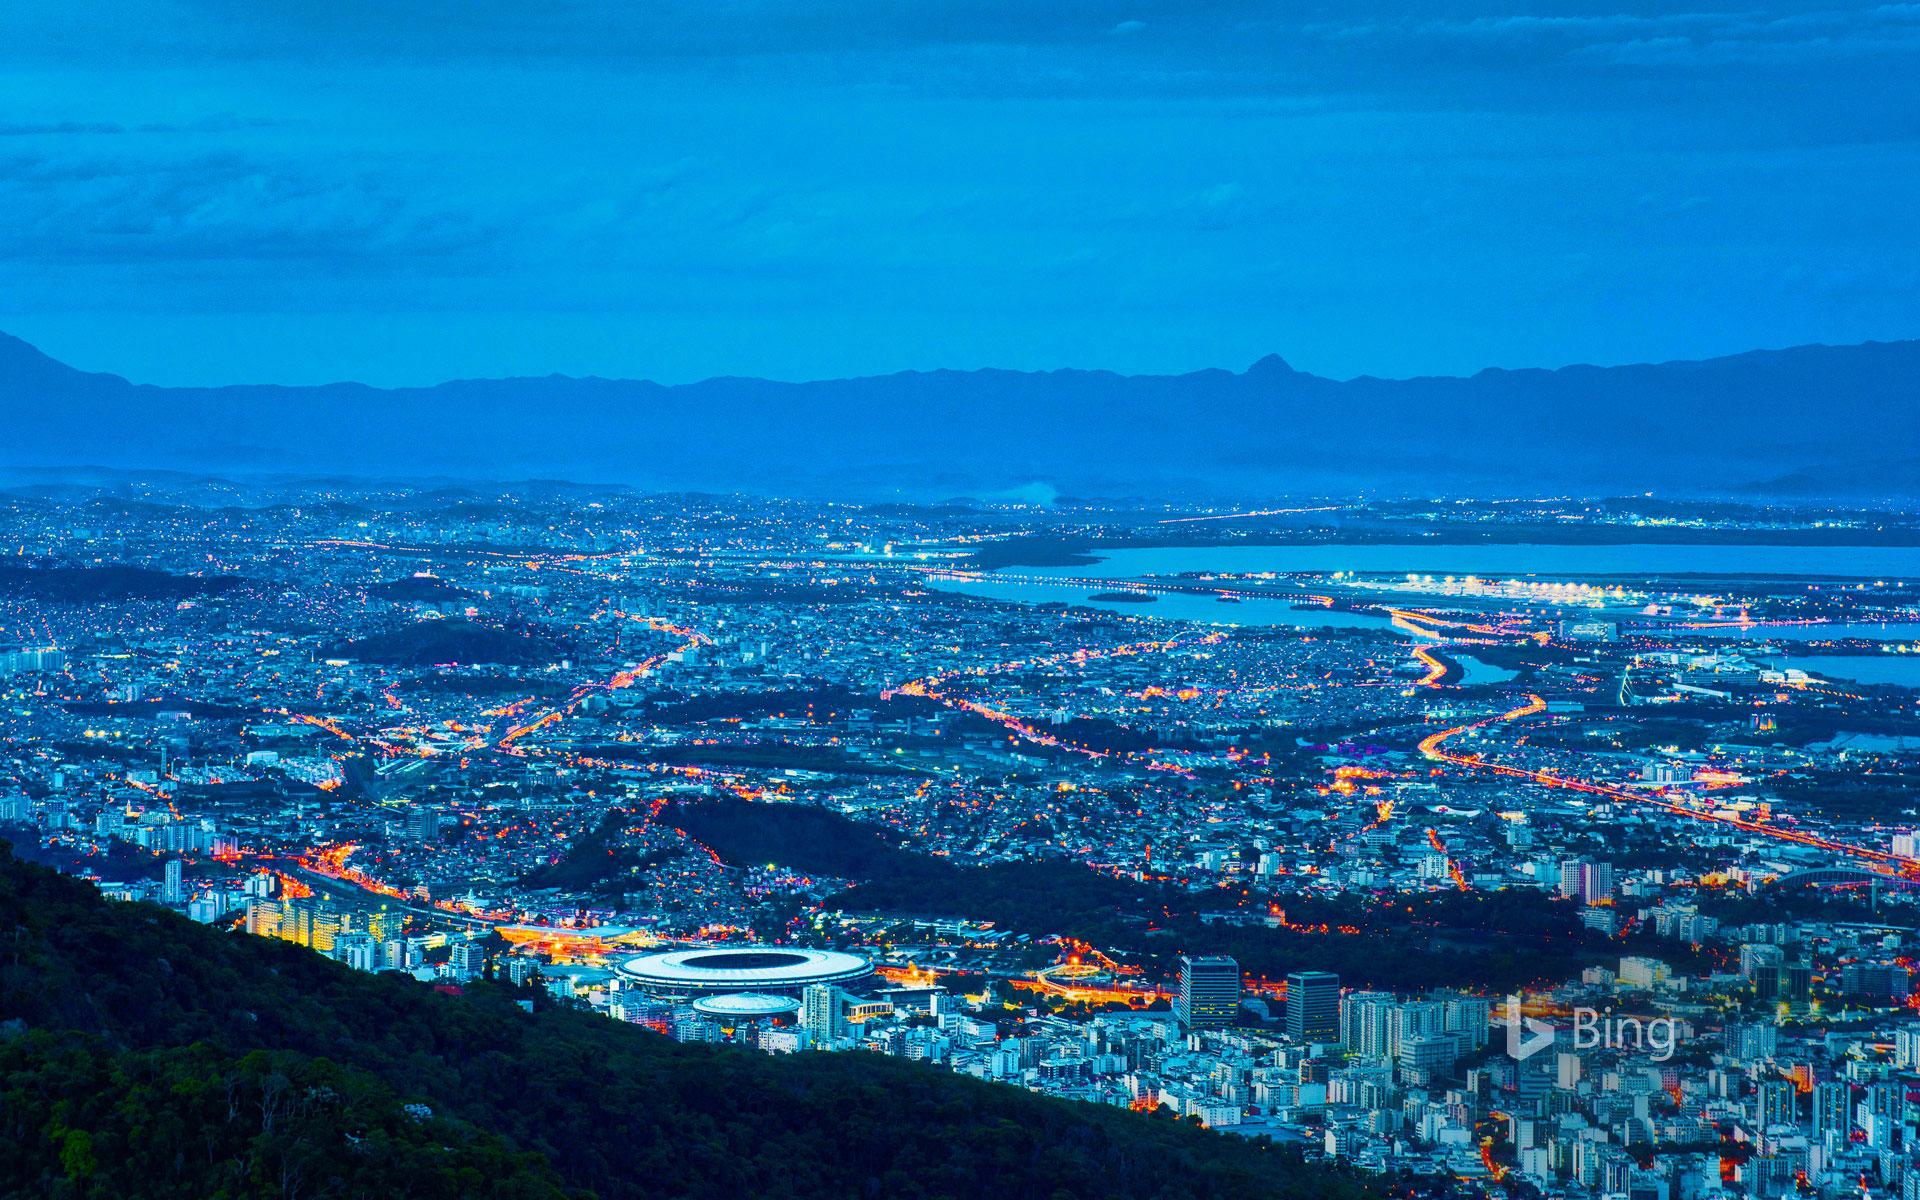 Rio de Janeiro including Maracanã Stadium illuminated at night